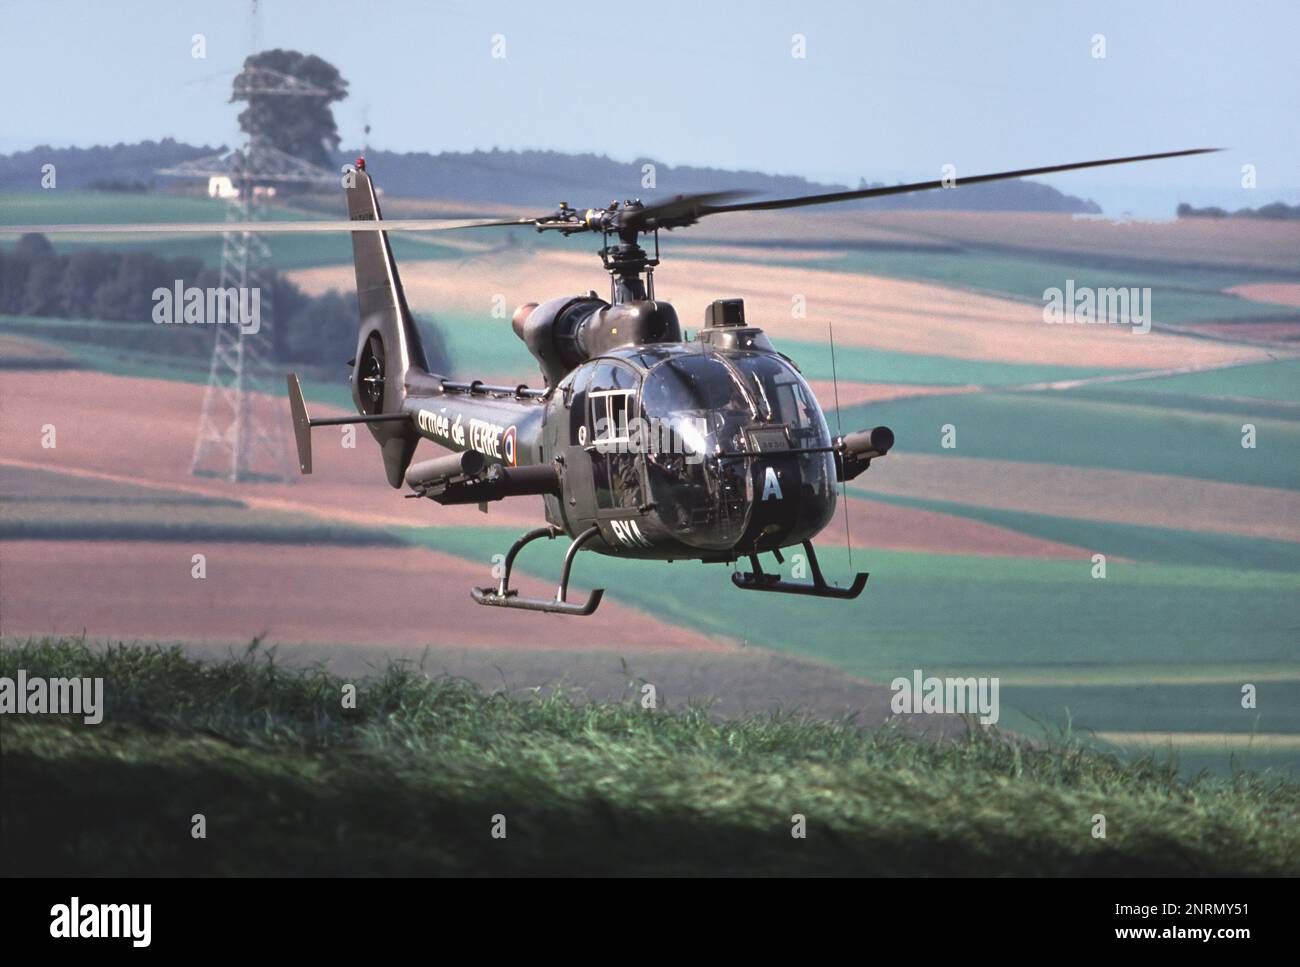 - Exercices militaires européens, hélicoptère français léger de combat sa 342 Gazelle - Esercitazioni militari europee, elicottero leggero francese da chetimento sa 342 Gazelle Banque D'Images